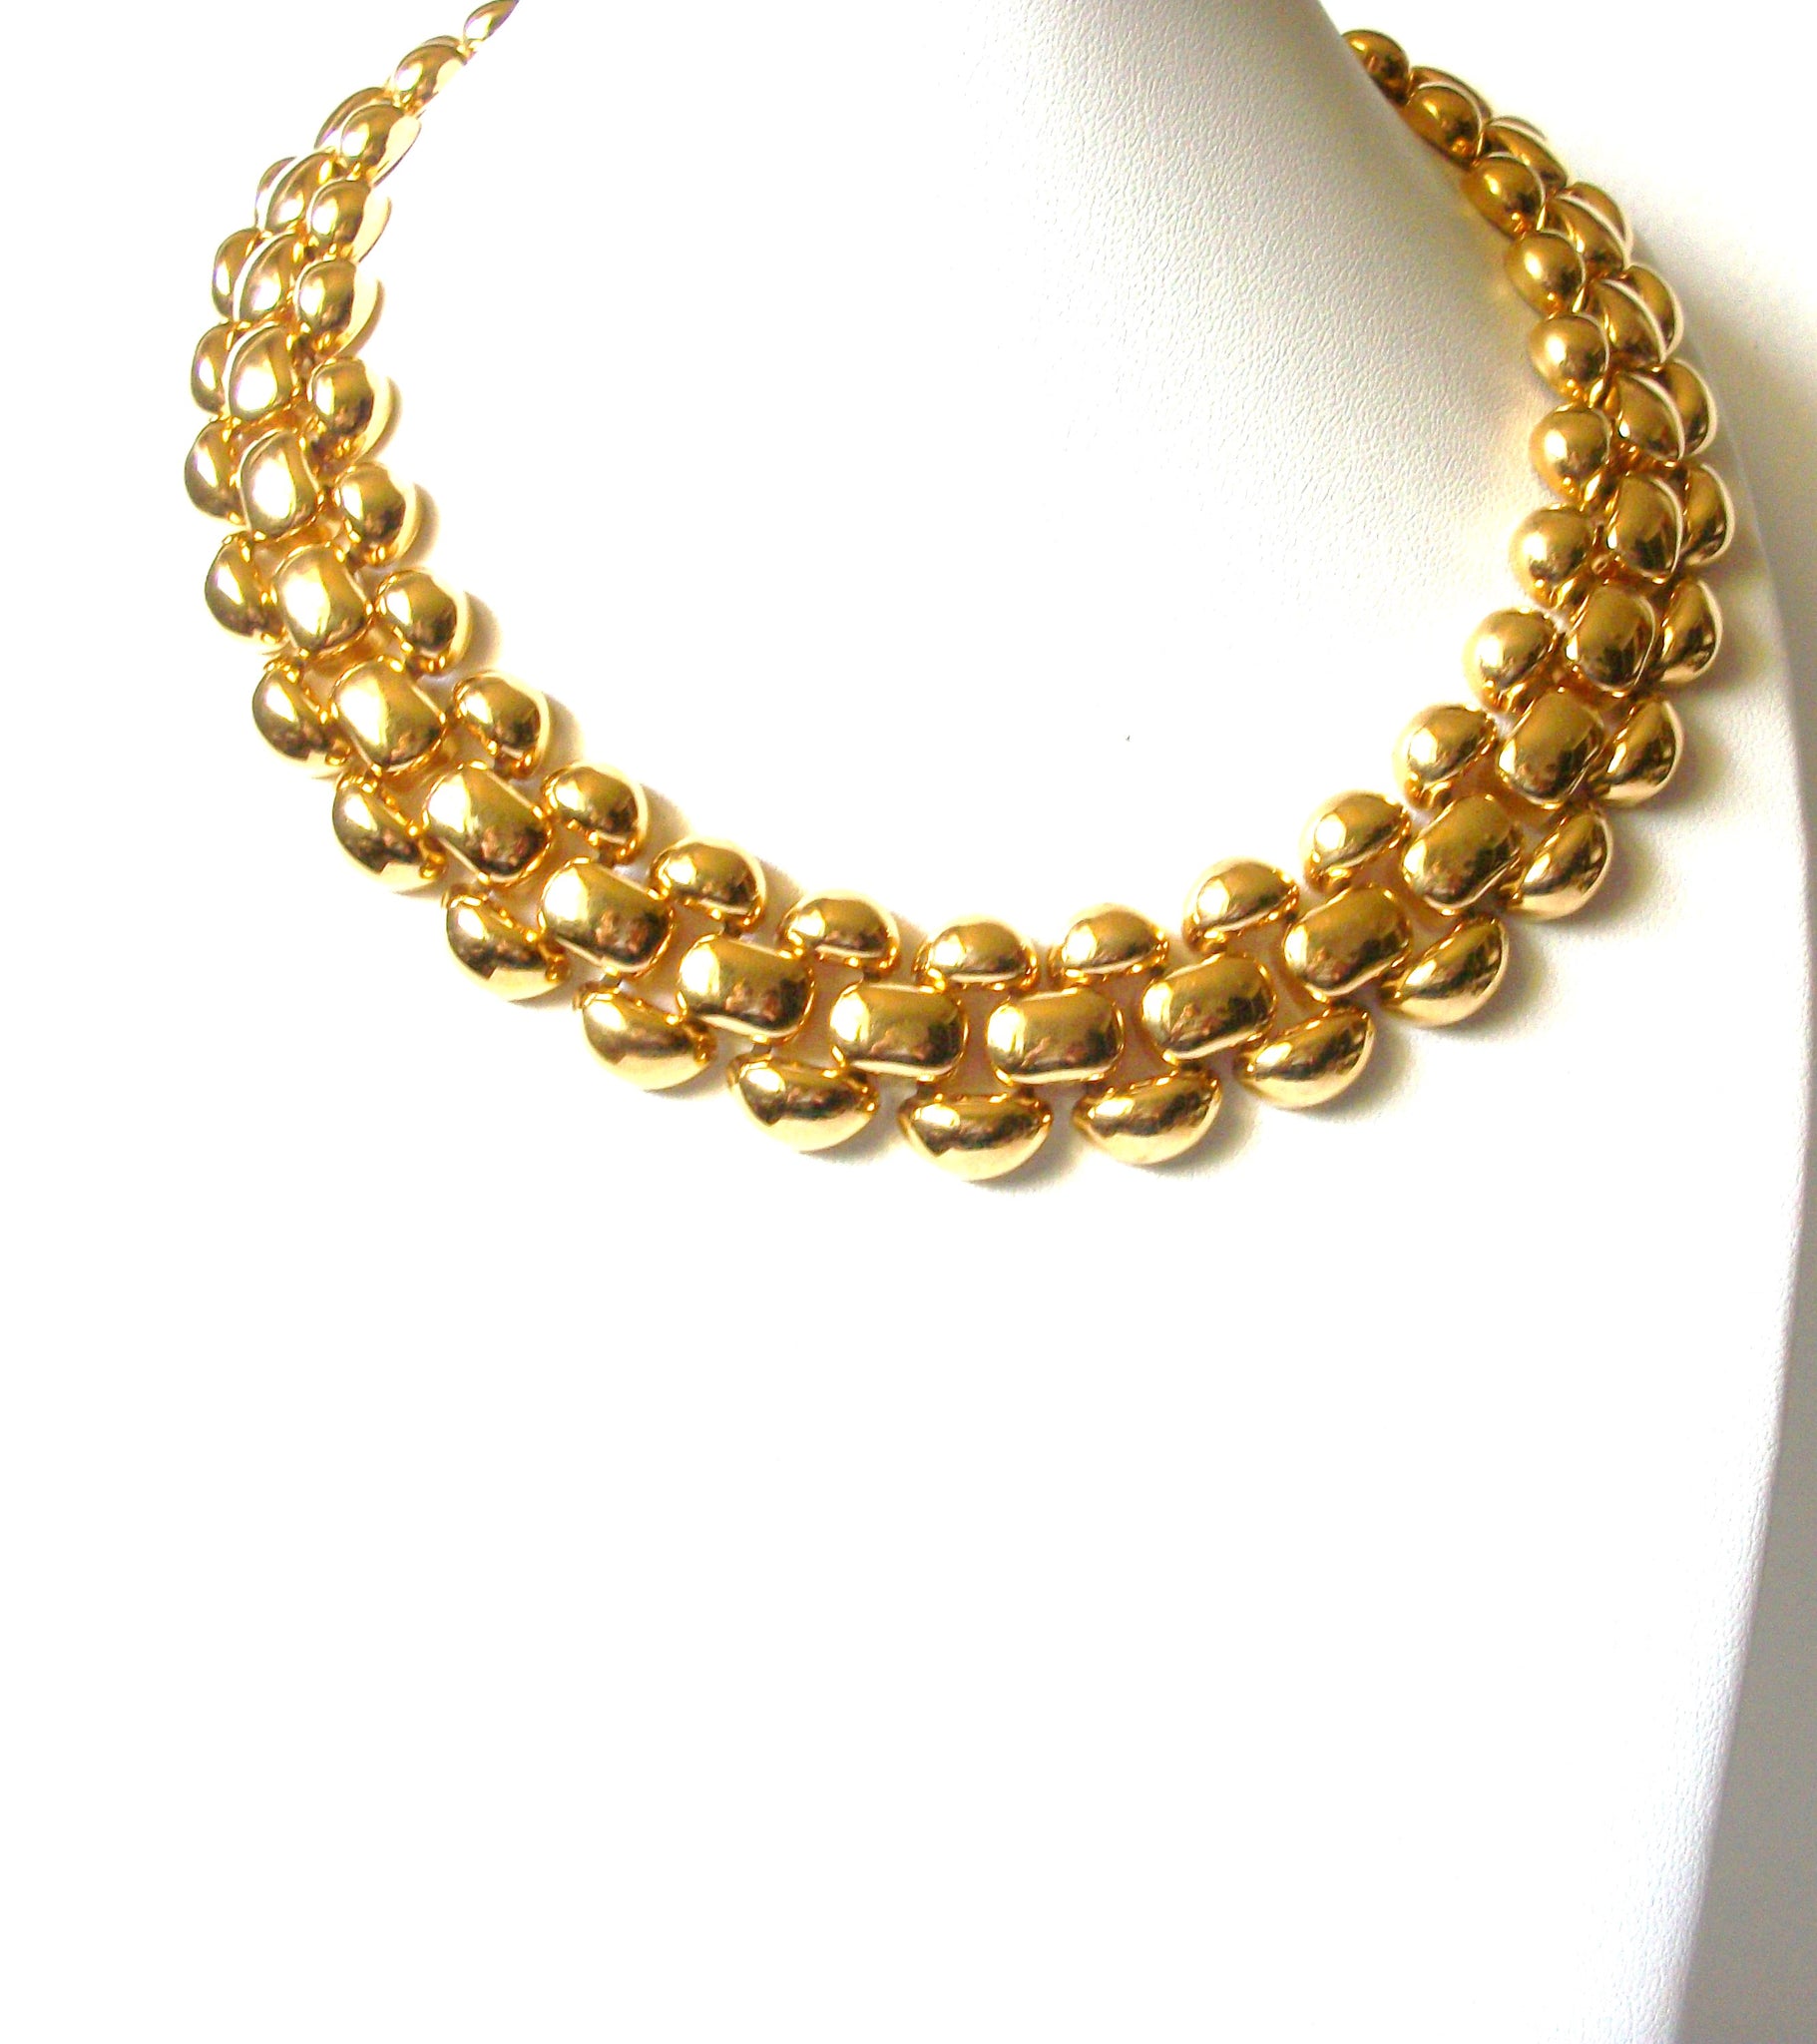 Sold at Auction: Vintage Napier Gold Tone Necklace